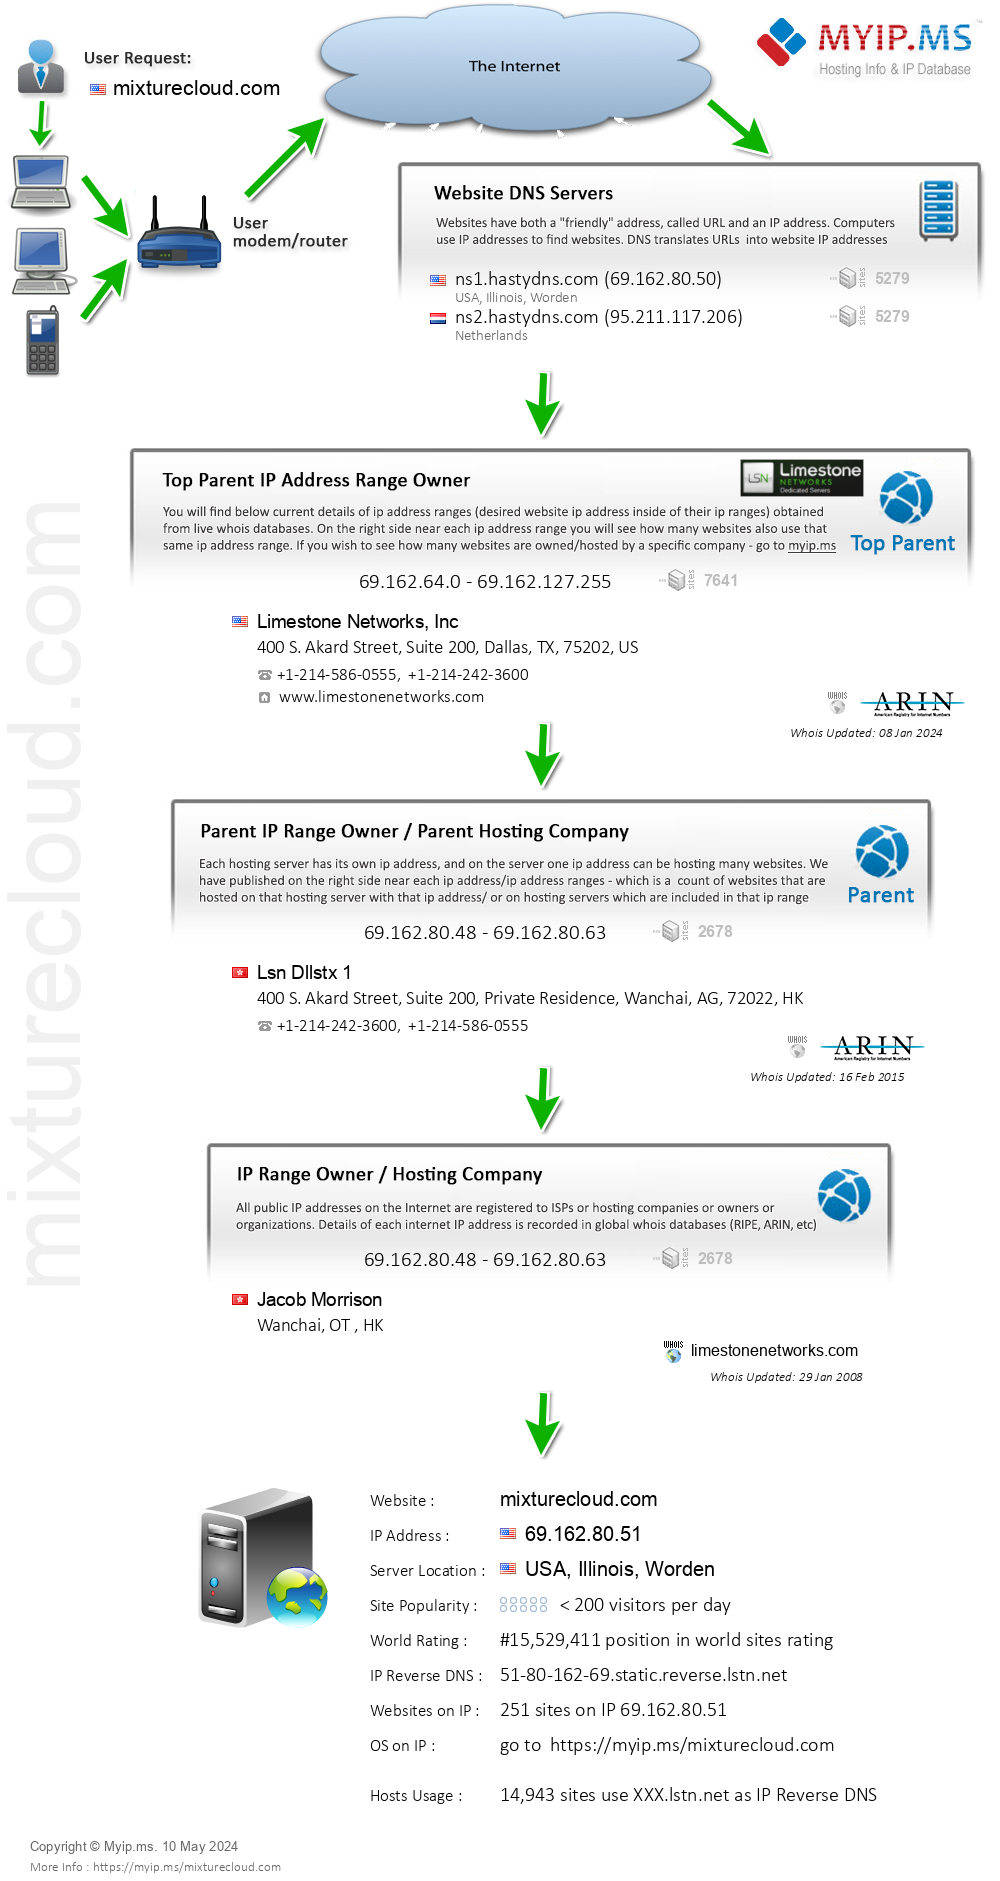 Mixturecloud.com - Website Hosting Visual IP Diagram